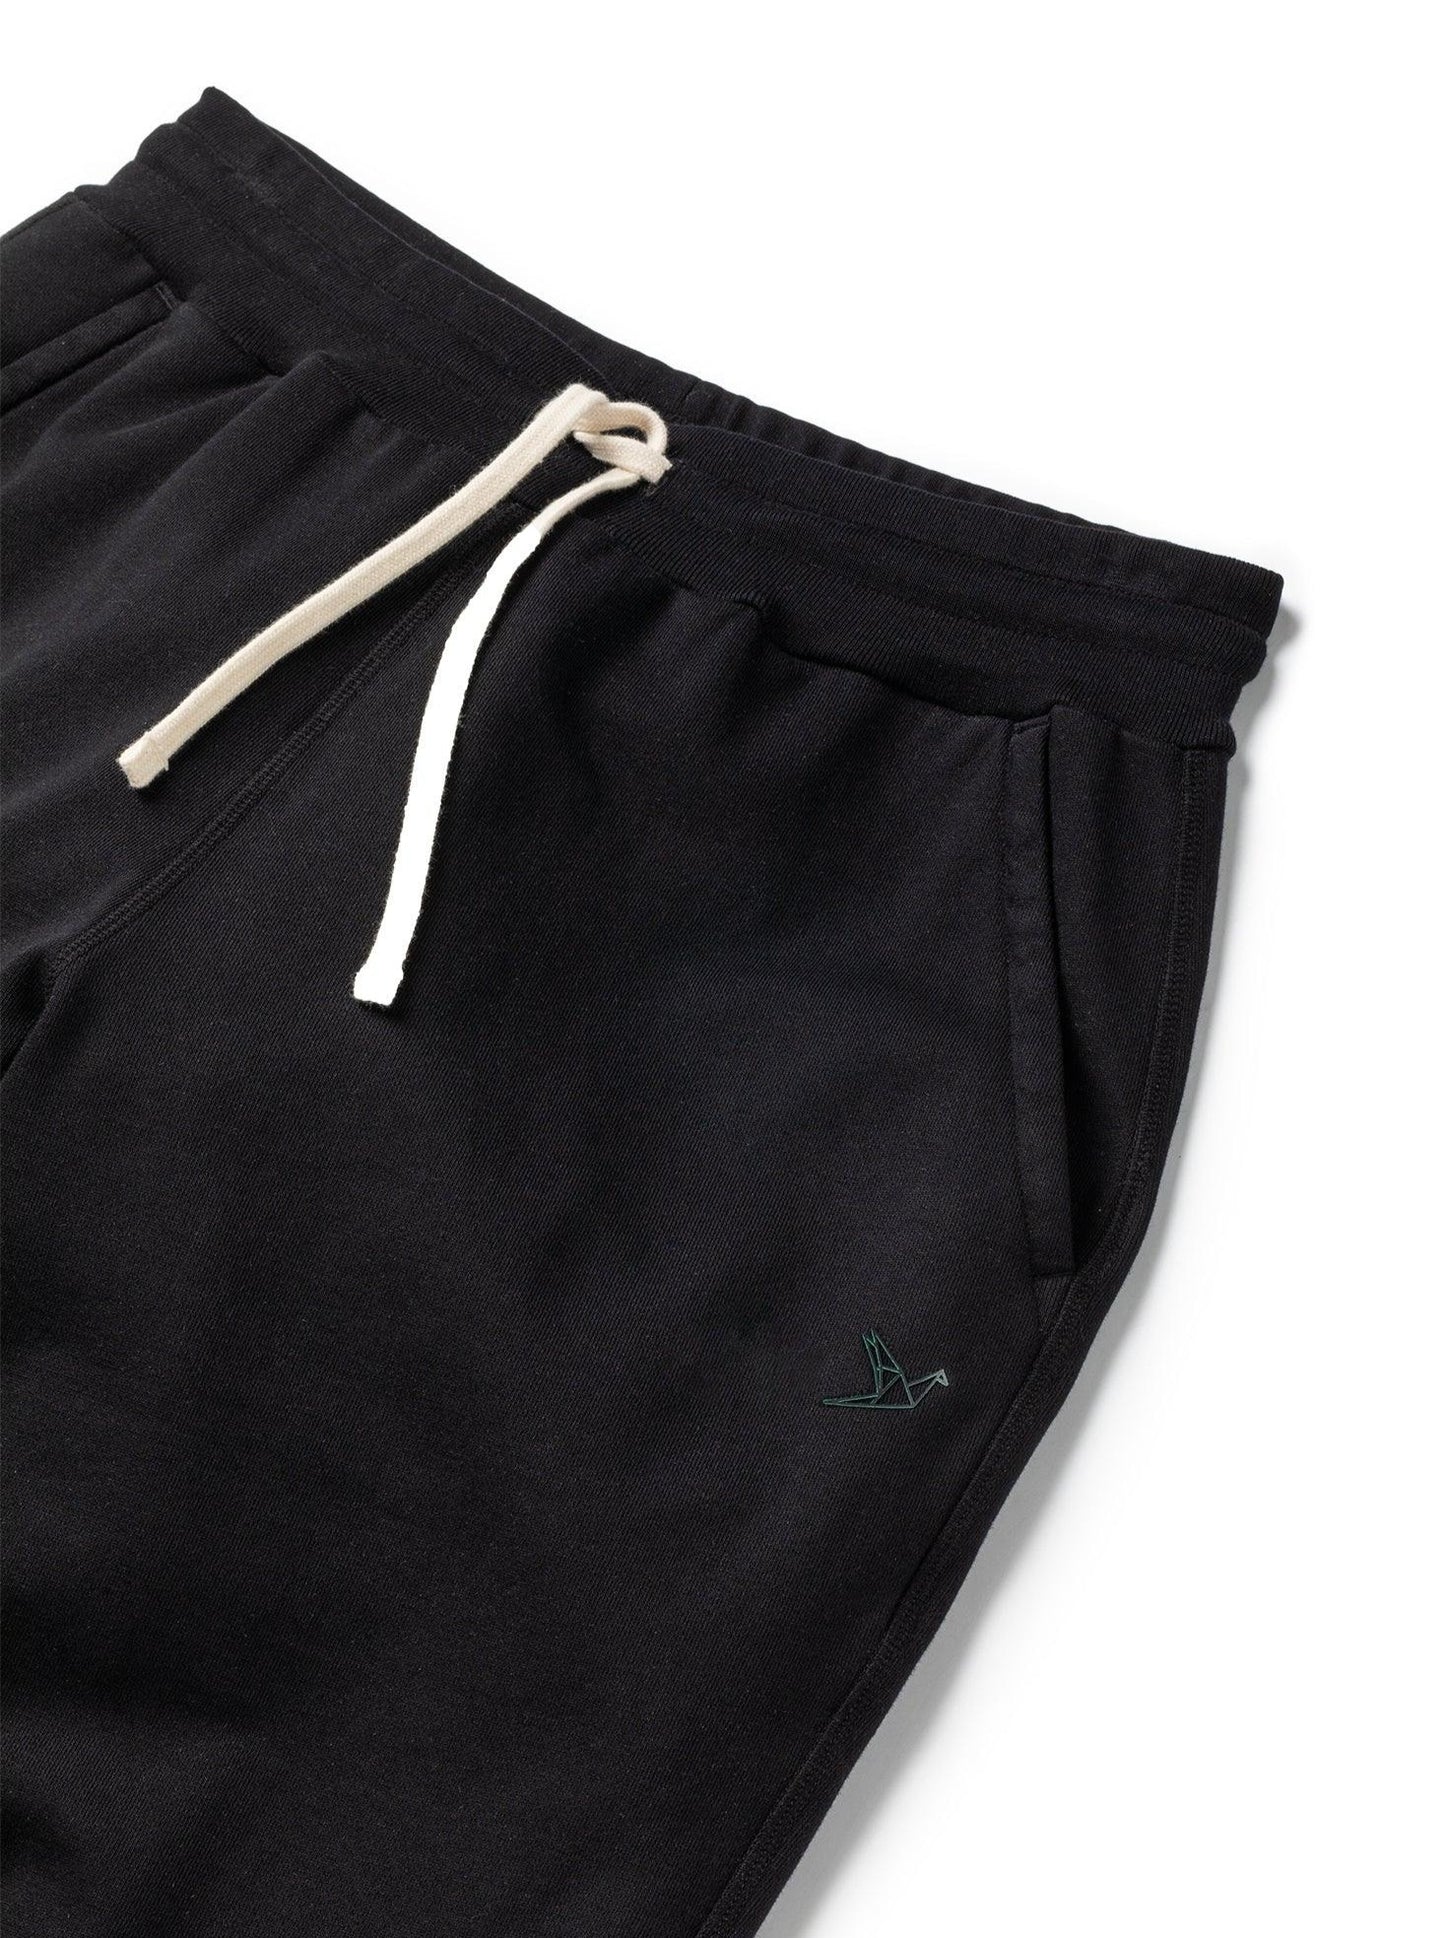 
                  
                    Women's Sweatpants - Black - ORILABO Project
                  
                